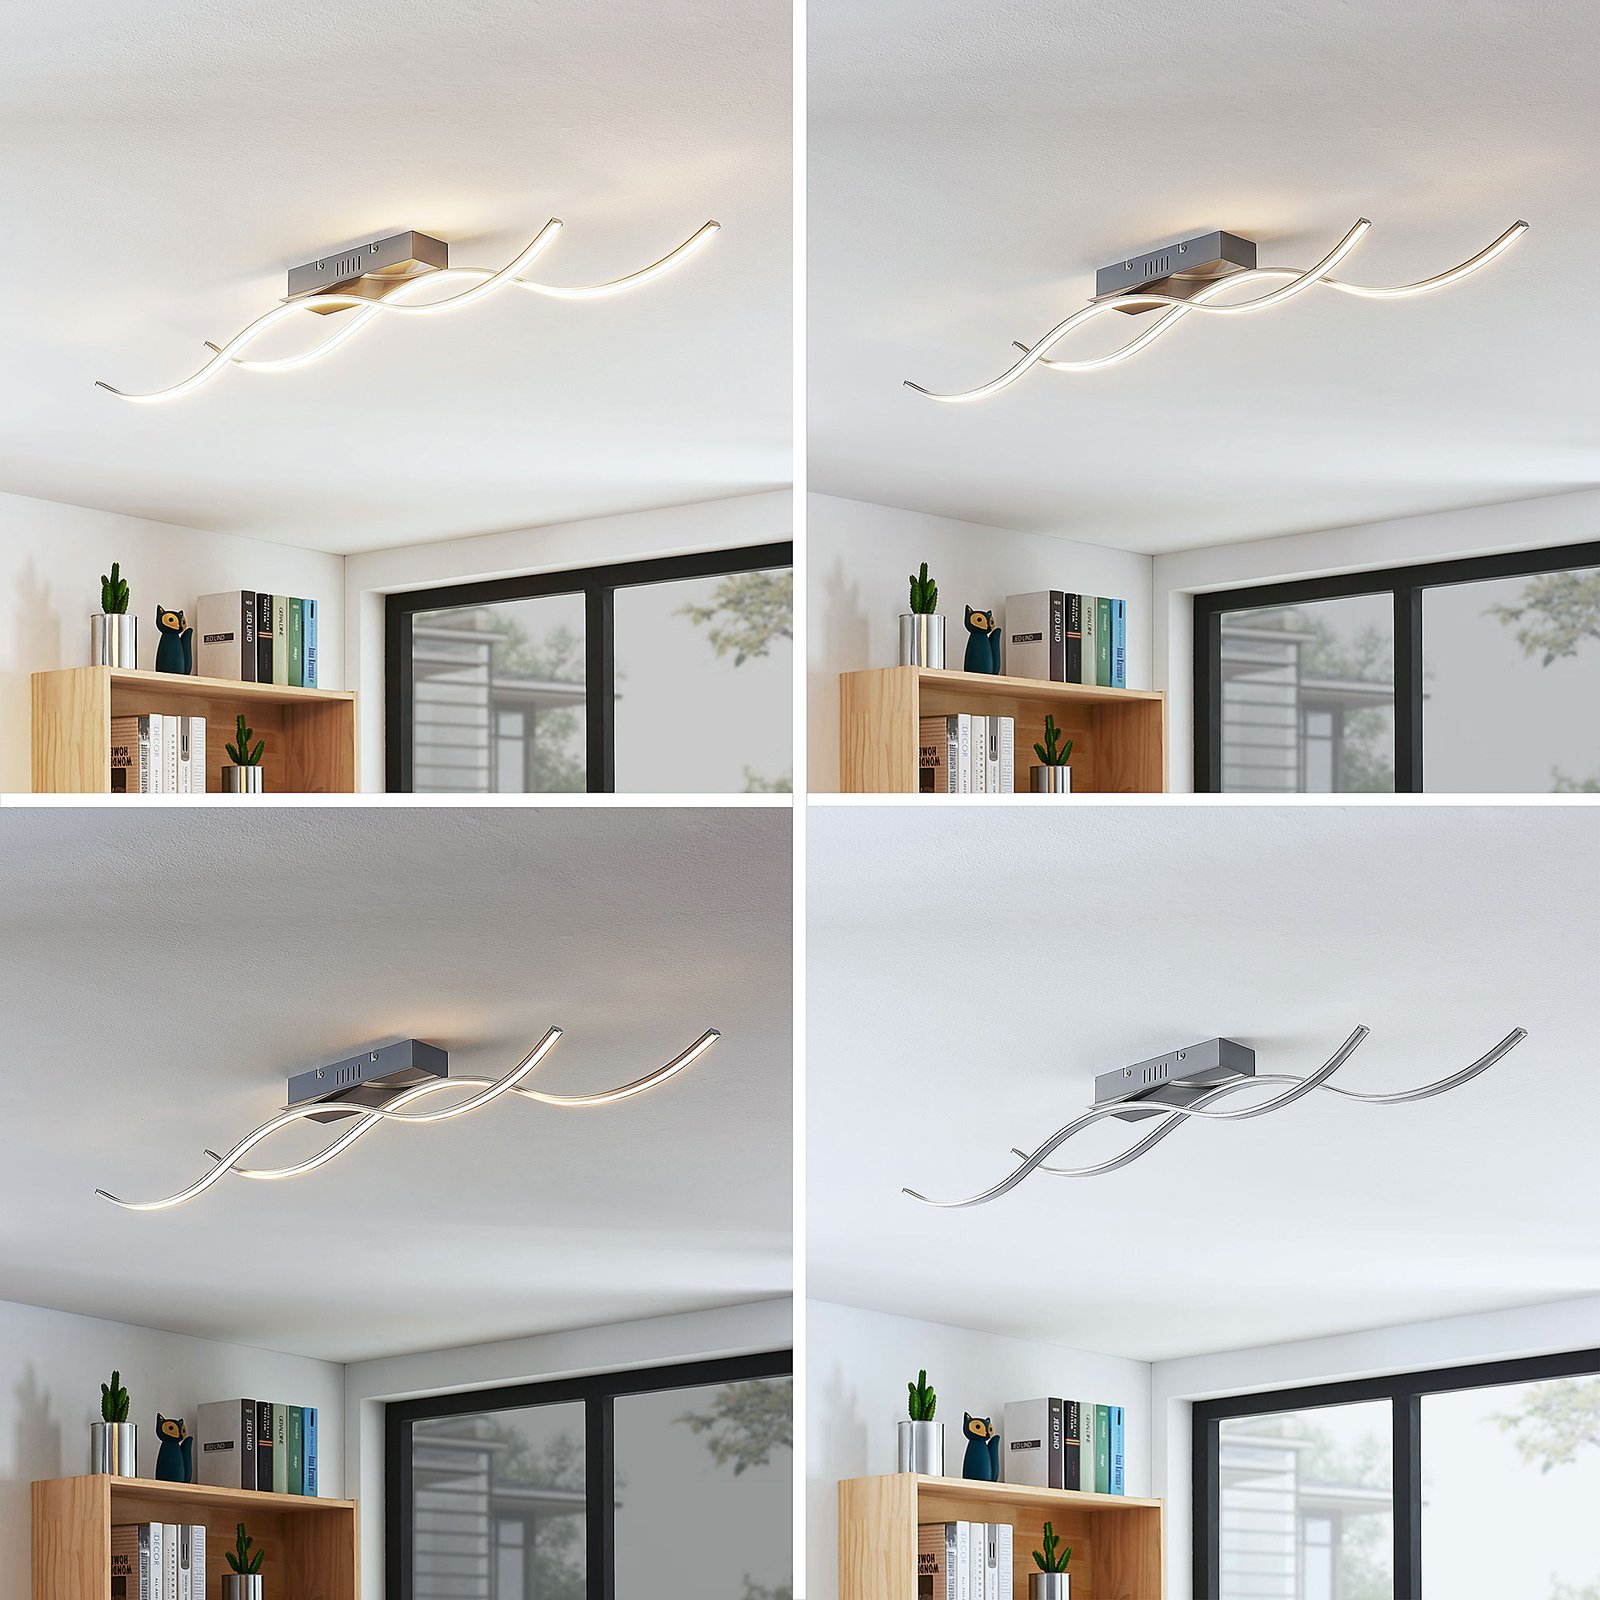 Safia curved LED ceiling light, two-bulb